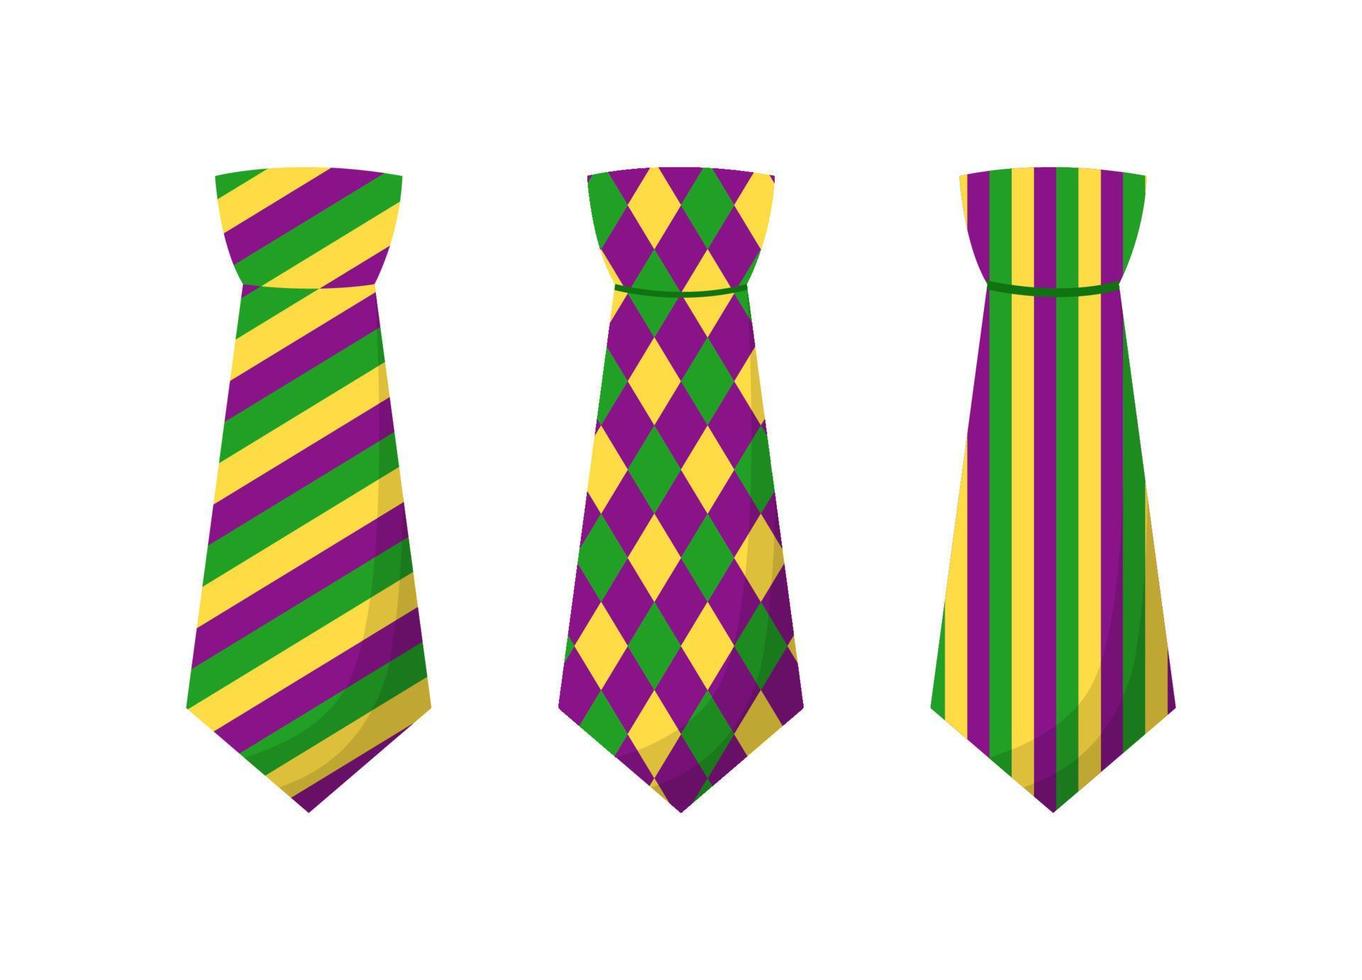 gravata colorida de desenho vetorial para fantasia de carnaval. acessório de carnaval isolado no fundo branco vetor